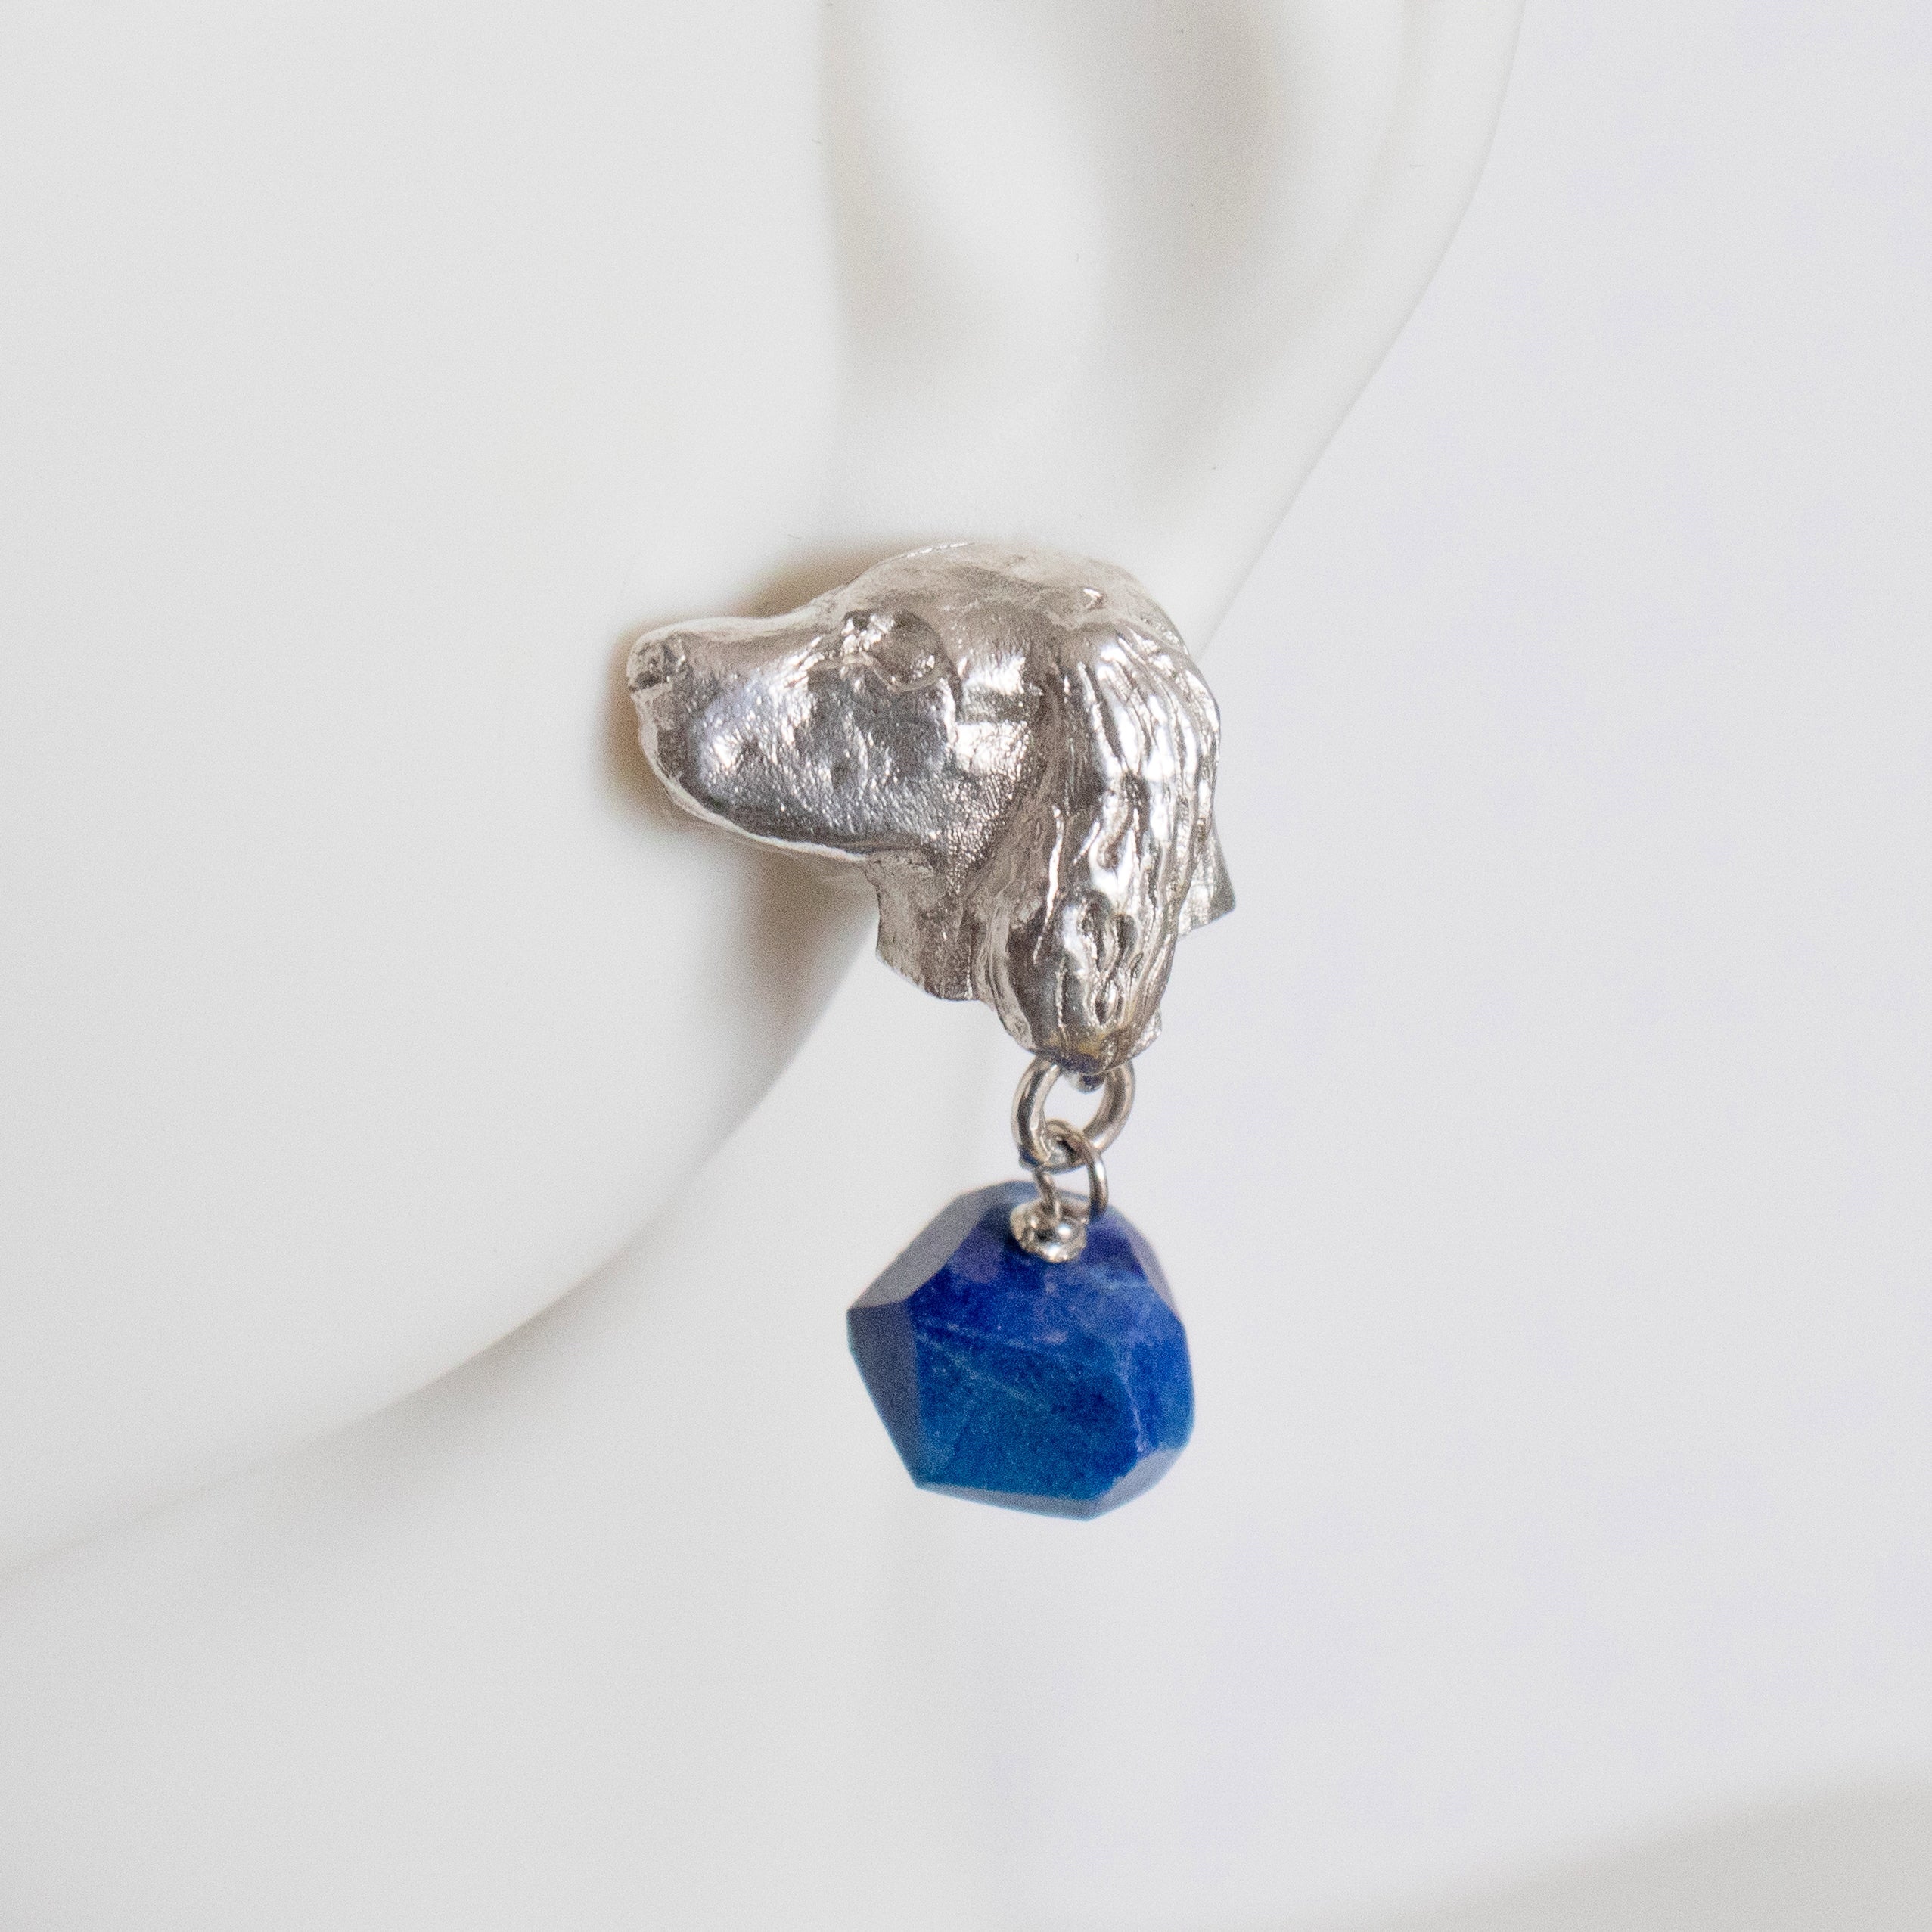 Spaniel Earrings & Lapis Lazuli Drops